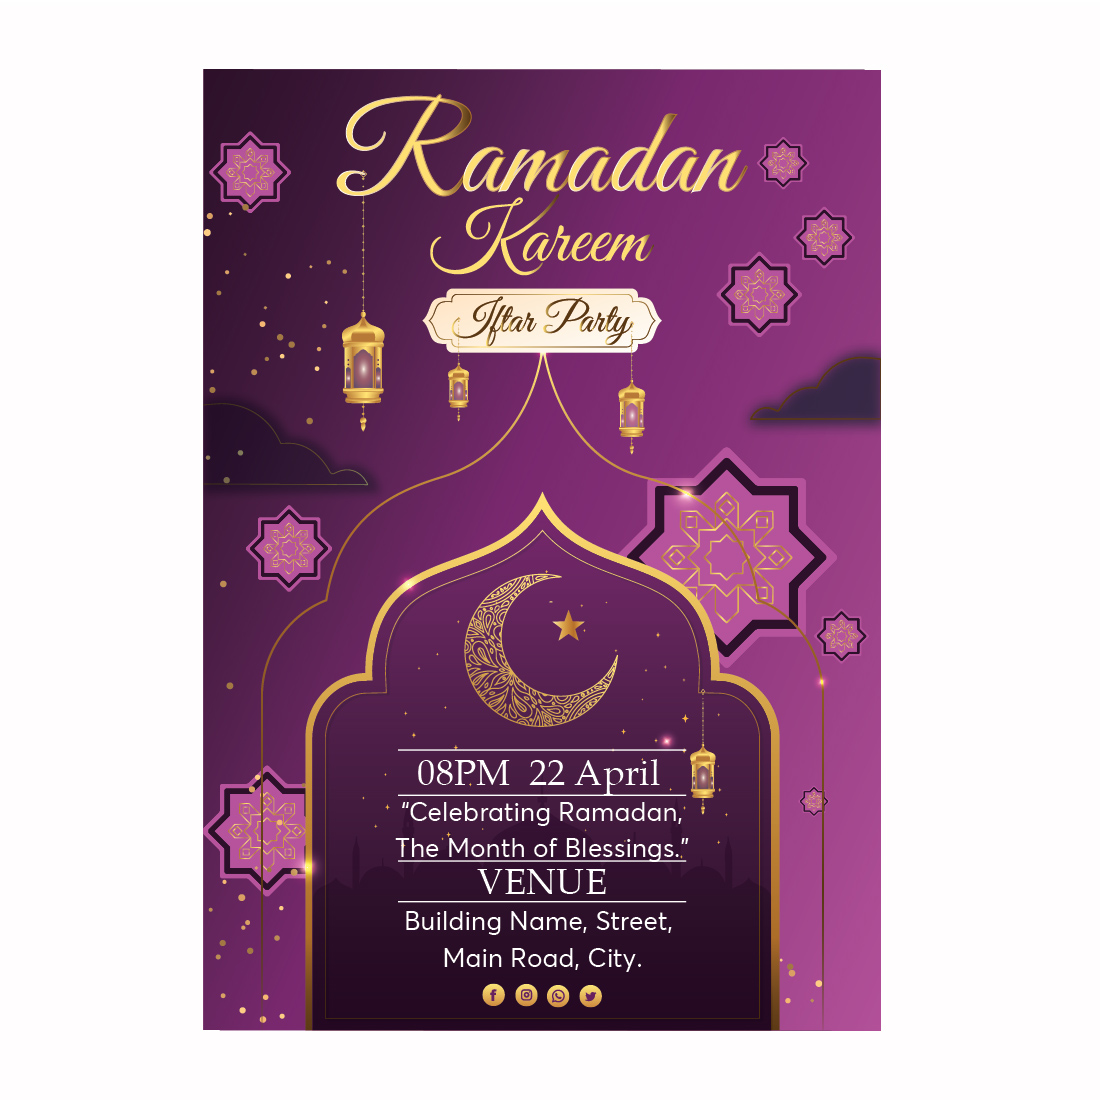 Ramadan Kareem Iftar Party Flyer preview image.